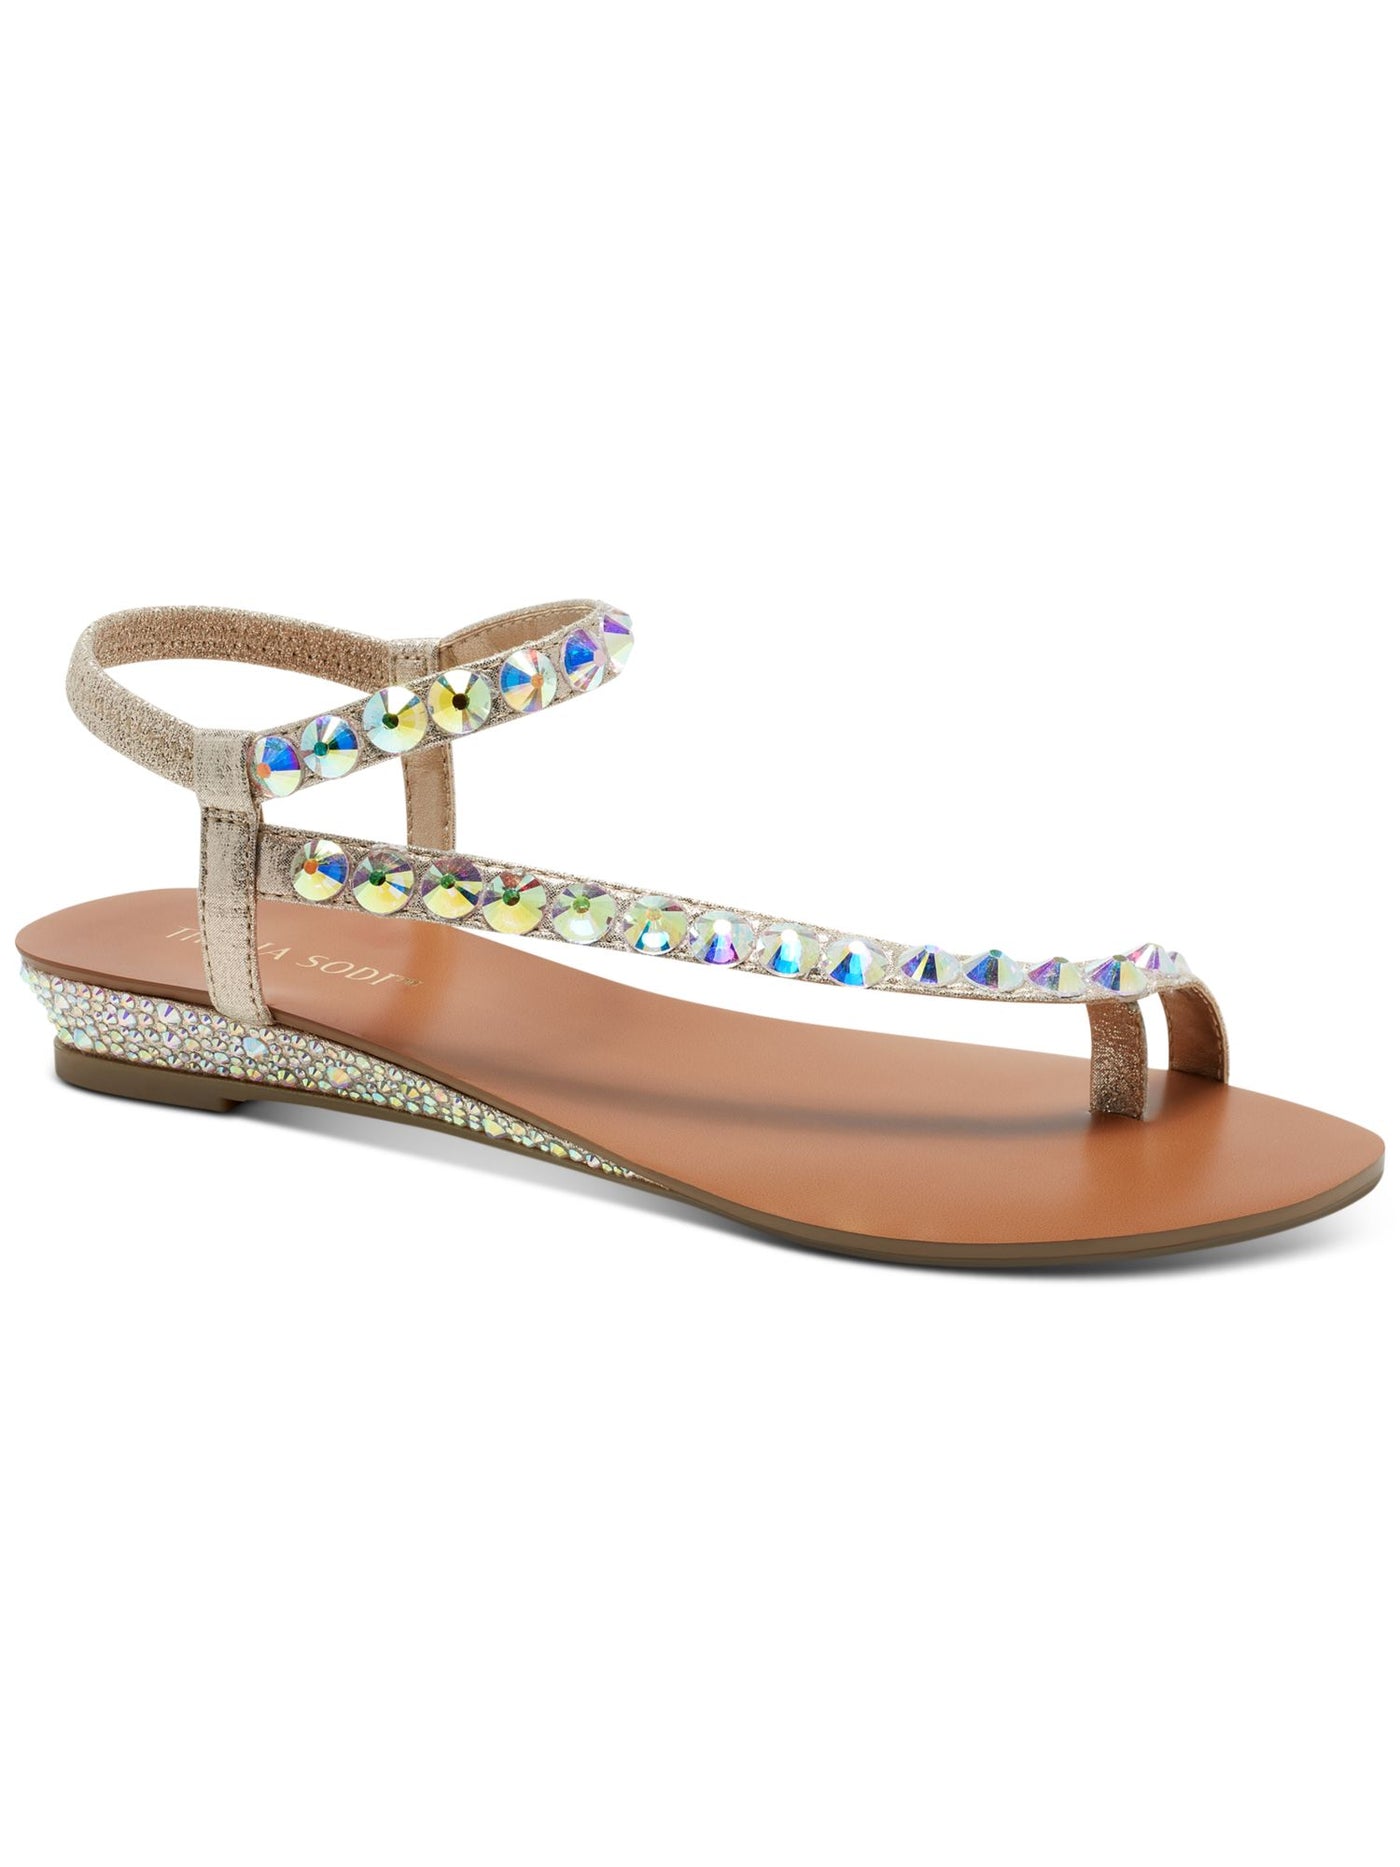 THALIA SODI Womens Gold Goring Ankle Strap Rhinestone Metallic Izabel Almond Toe Wedge Slip On Dress Thong Sandals Shoes 7.5 M